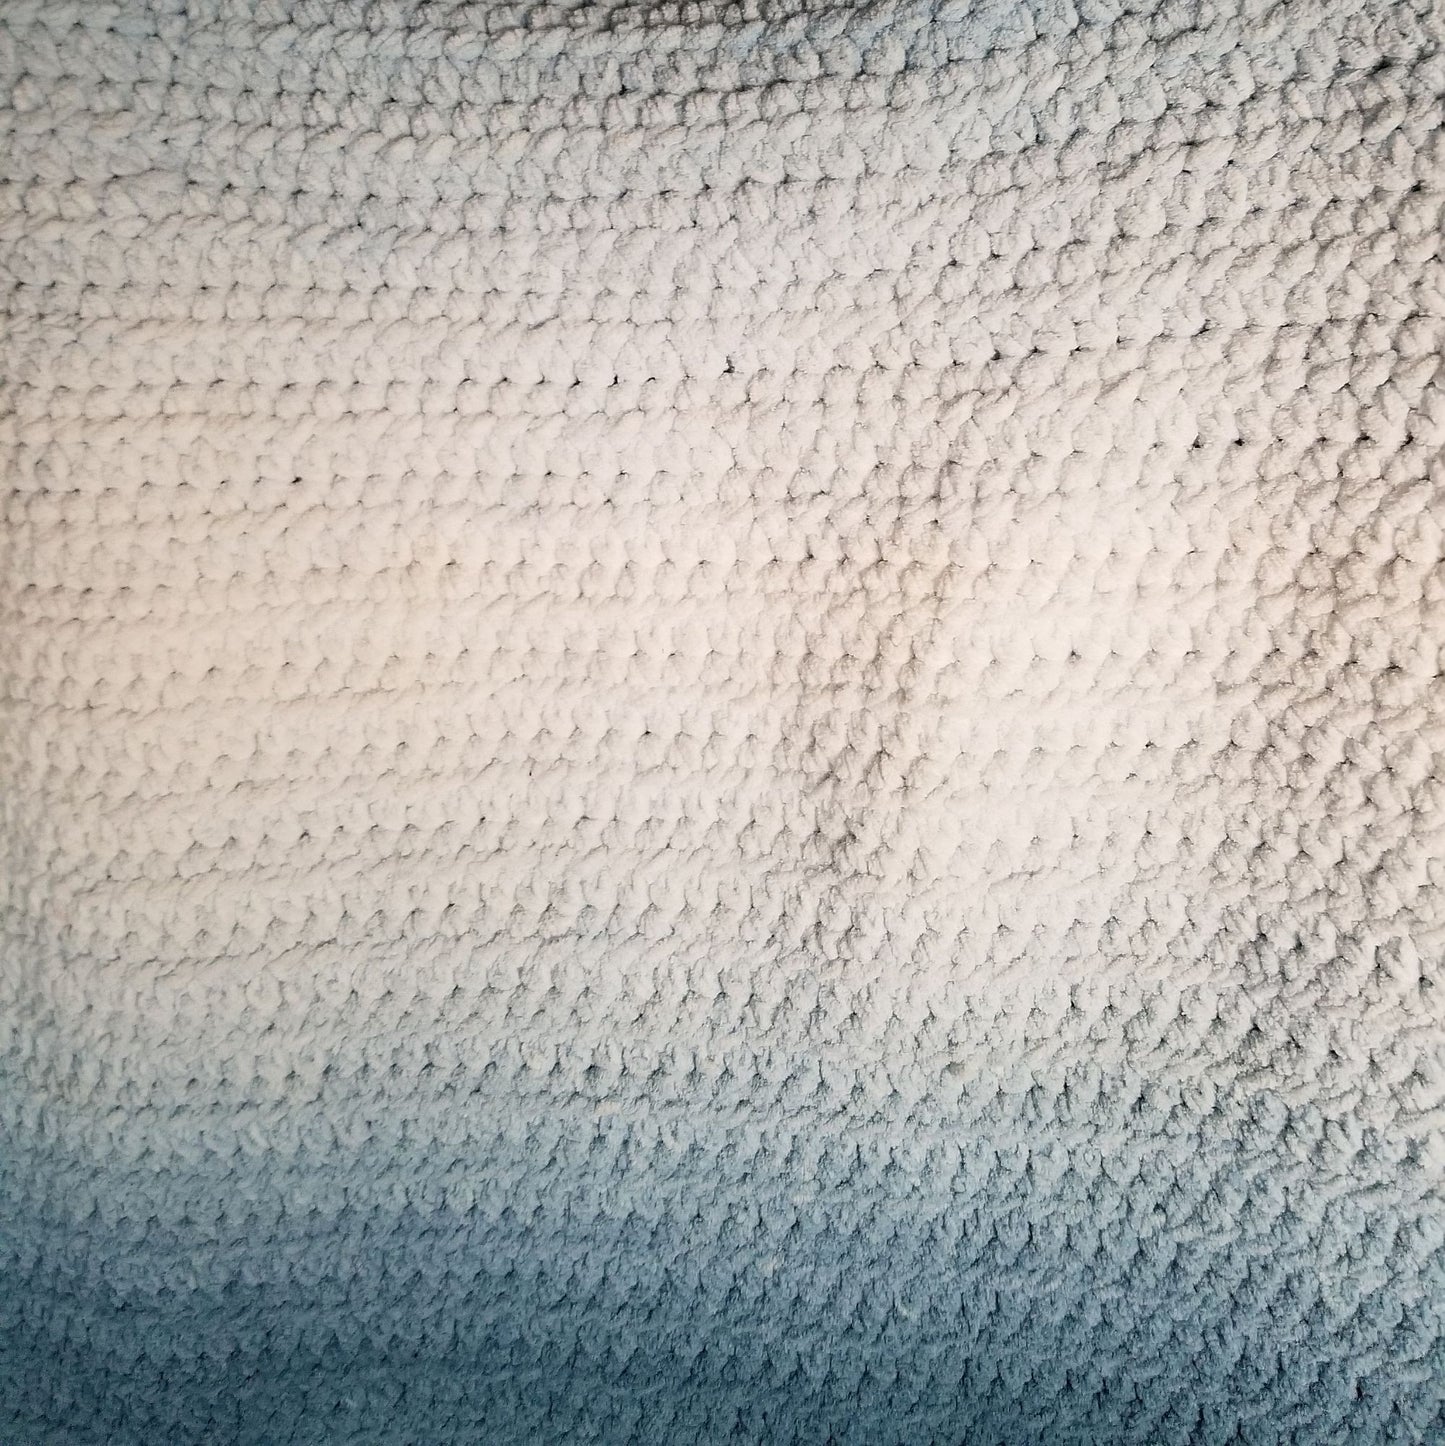 Blended Lapghan Crochet Pattern, PDF Digital Download